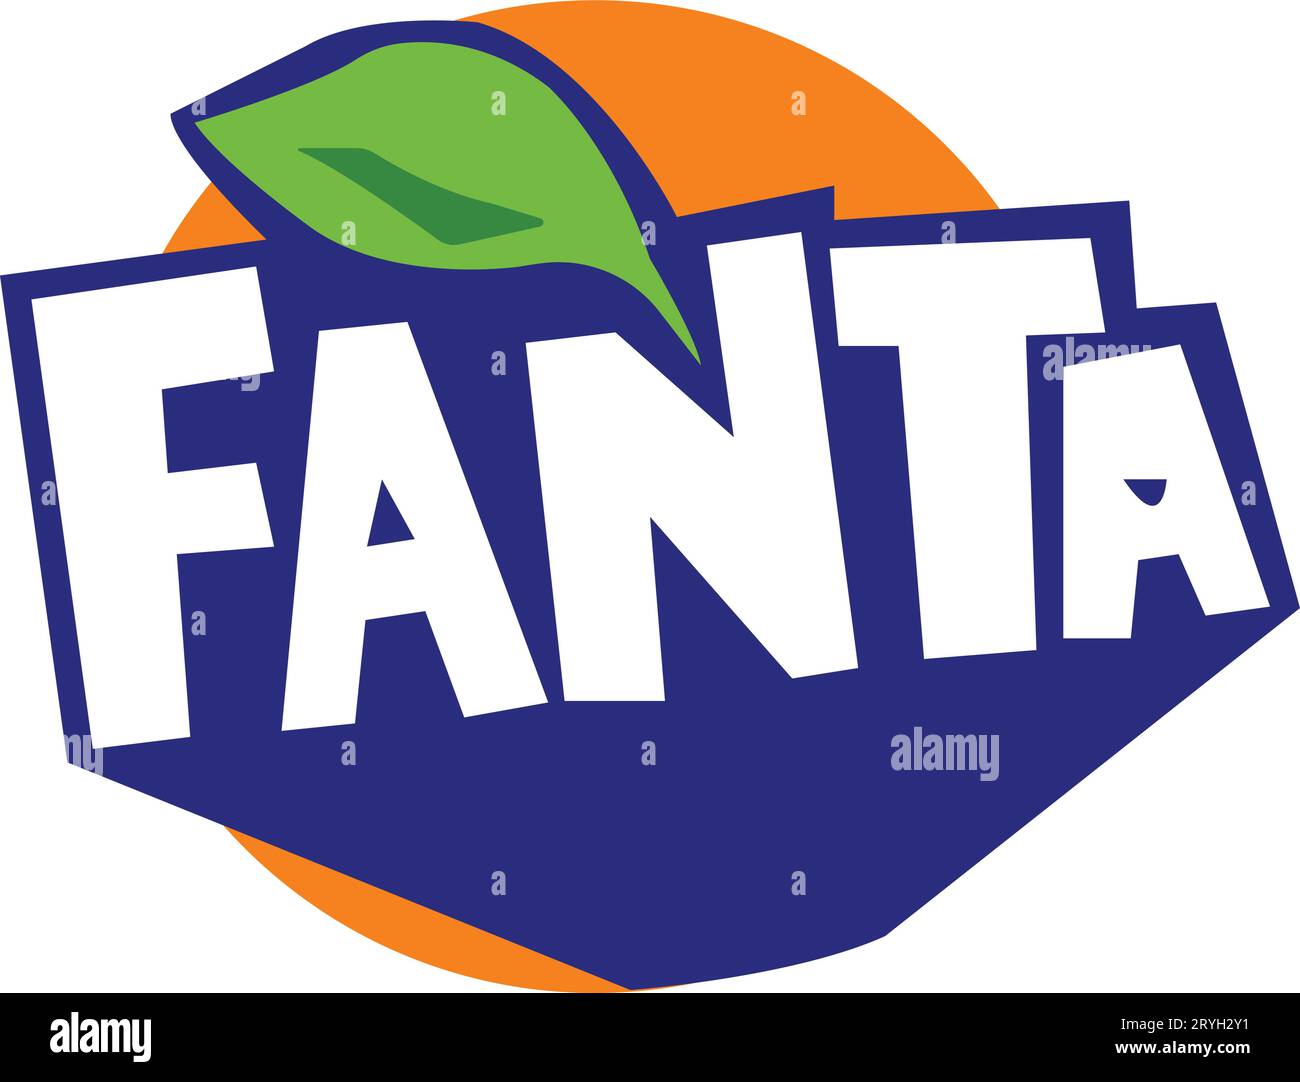 Drink brands. Fanta energy drink company logo. Stock Vector